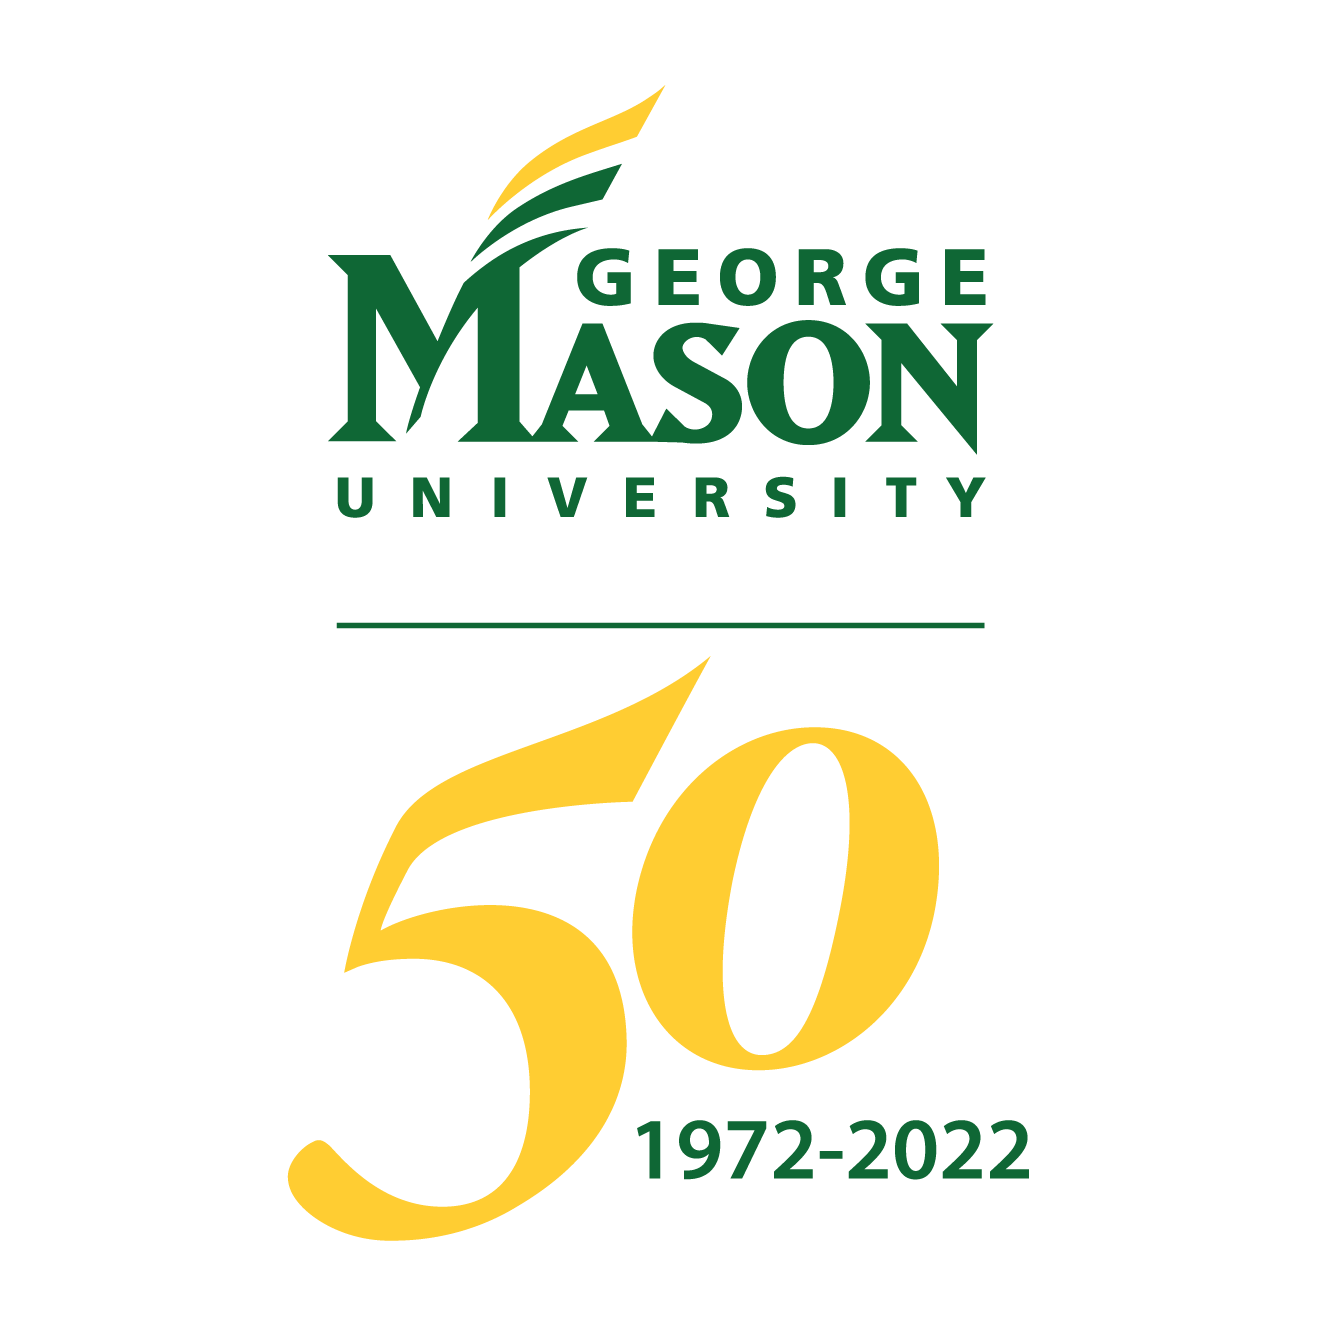 George Mason University's 50th Anniversary 1972-2022